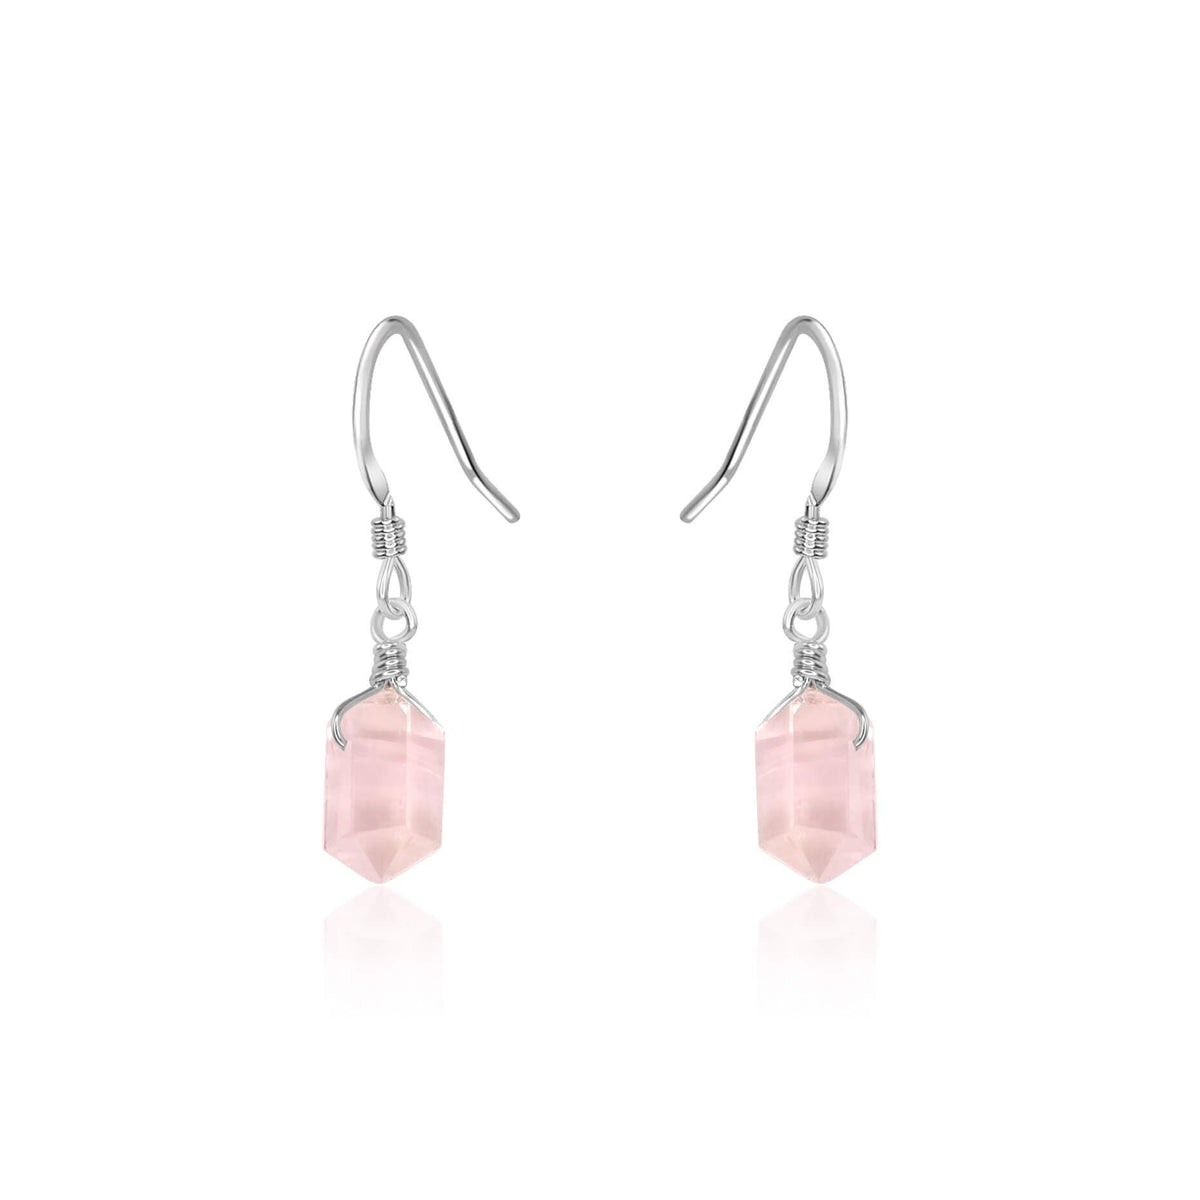 Double Terminated Crystal Dangle Drop Earrings - Rose Quartz - Sterling Silver - Luna Tide Handmade Jewellery